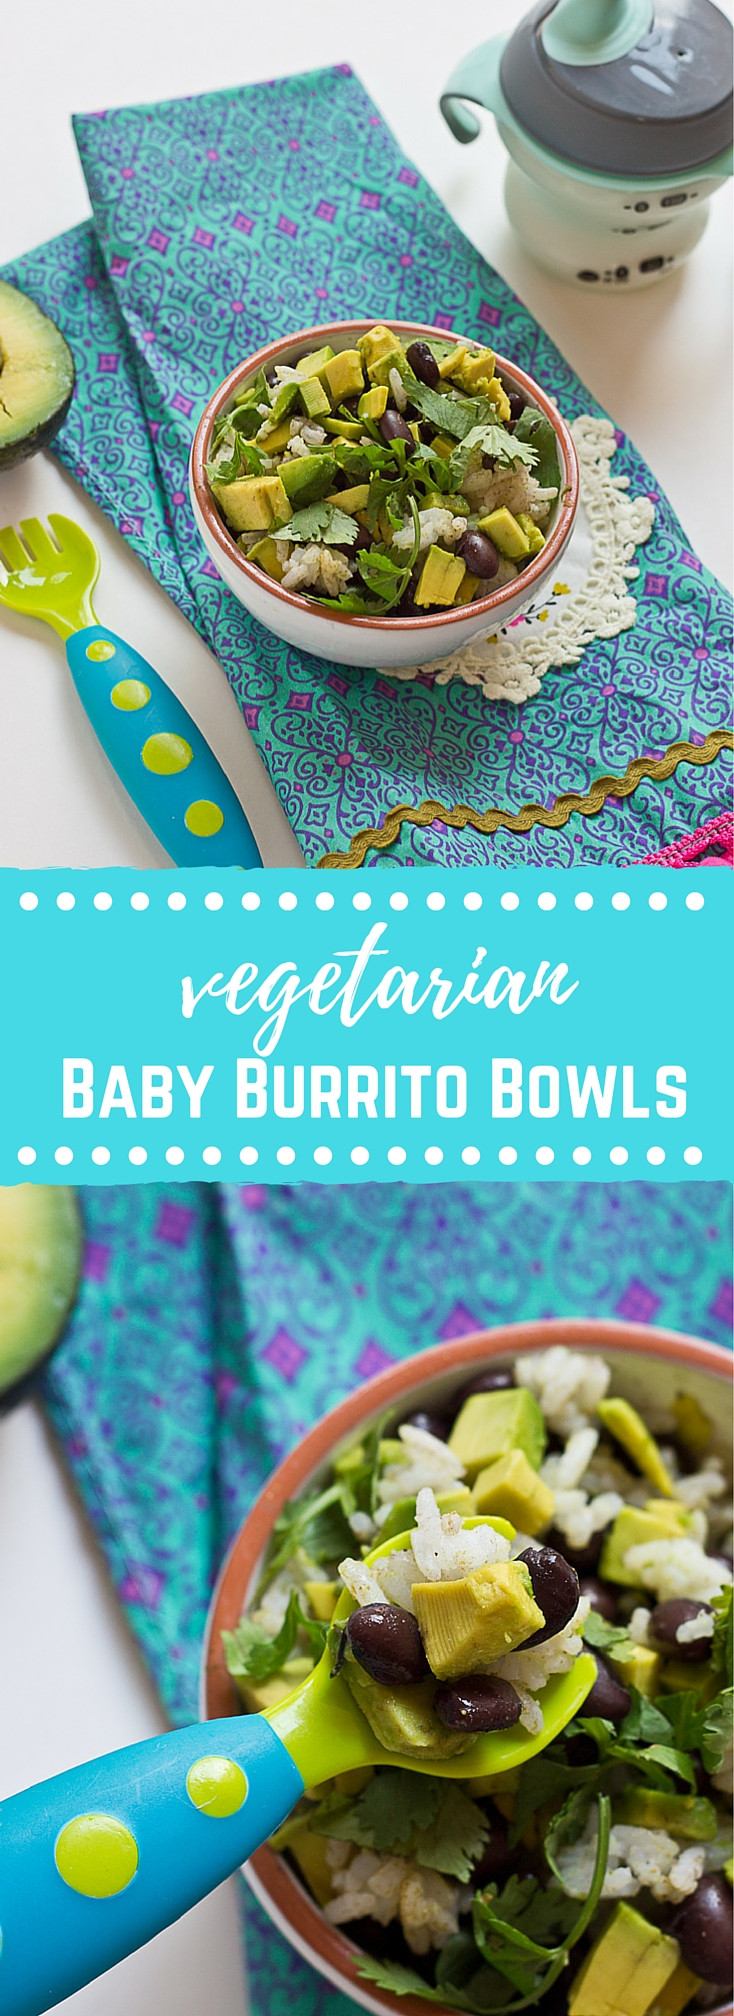 Vegetarian Baby Recipes
 Ve arian Baby Burrito Bowls